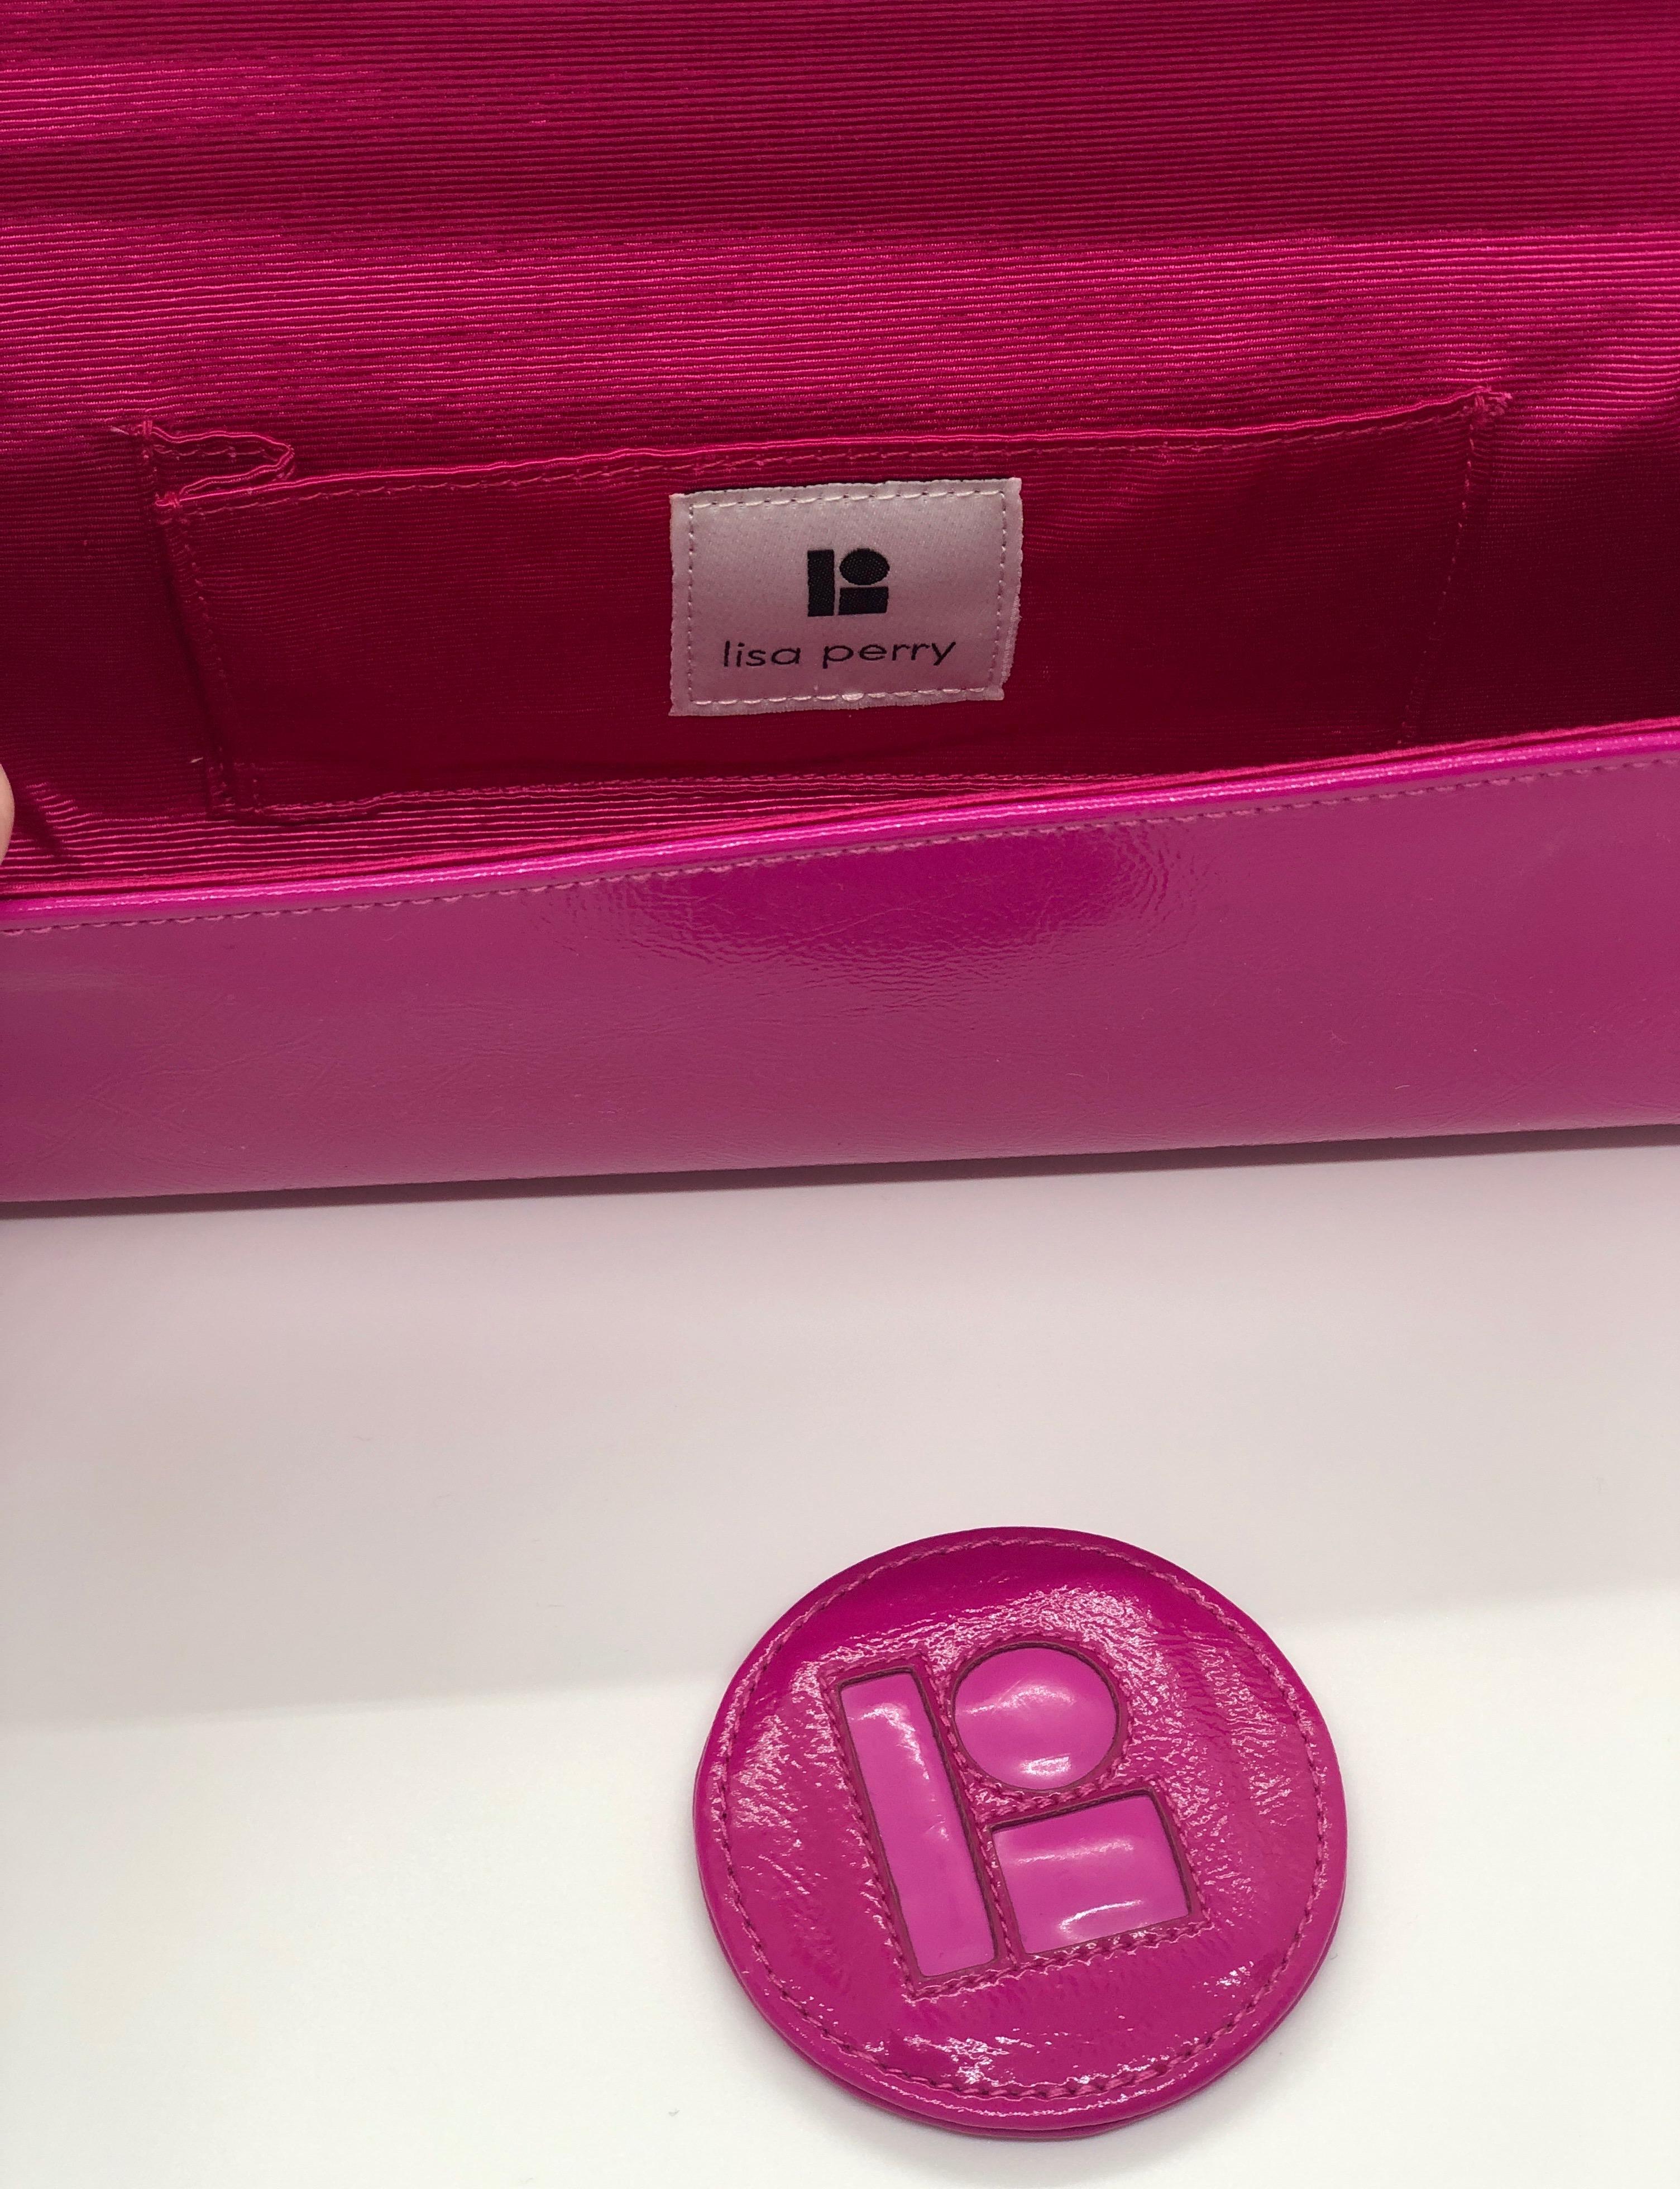 Lisa Perry Mod Fuchsia Pink Patent Leather Clutch Handbag w/ Magnetic Closure  11